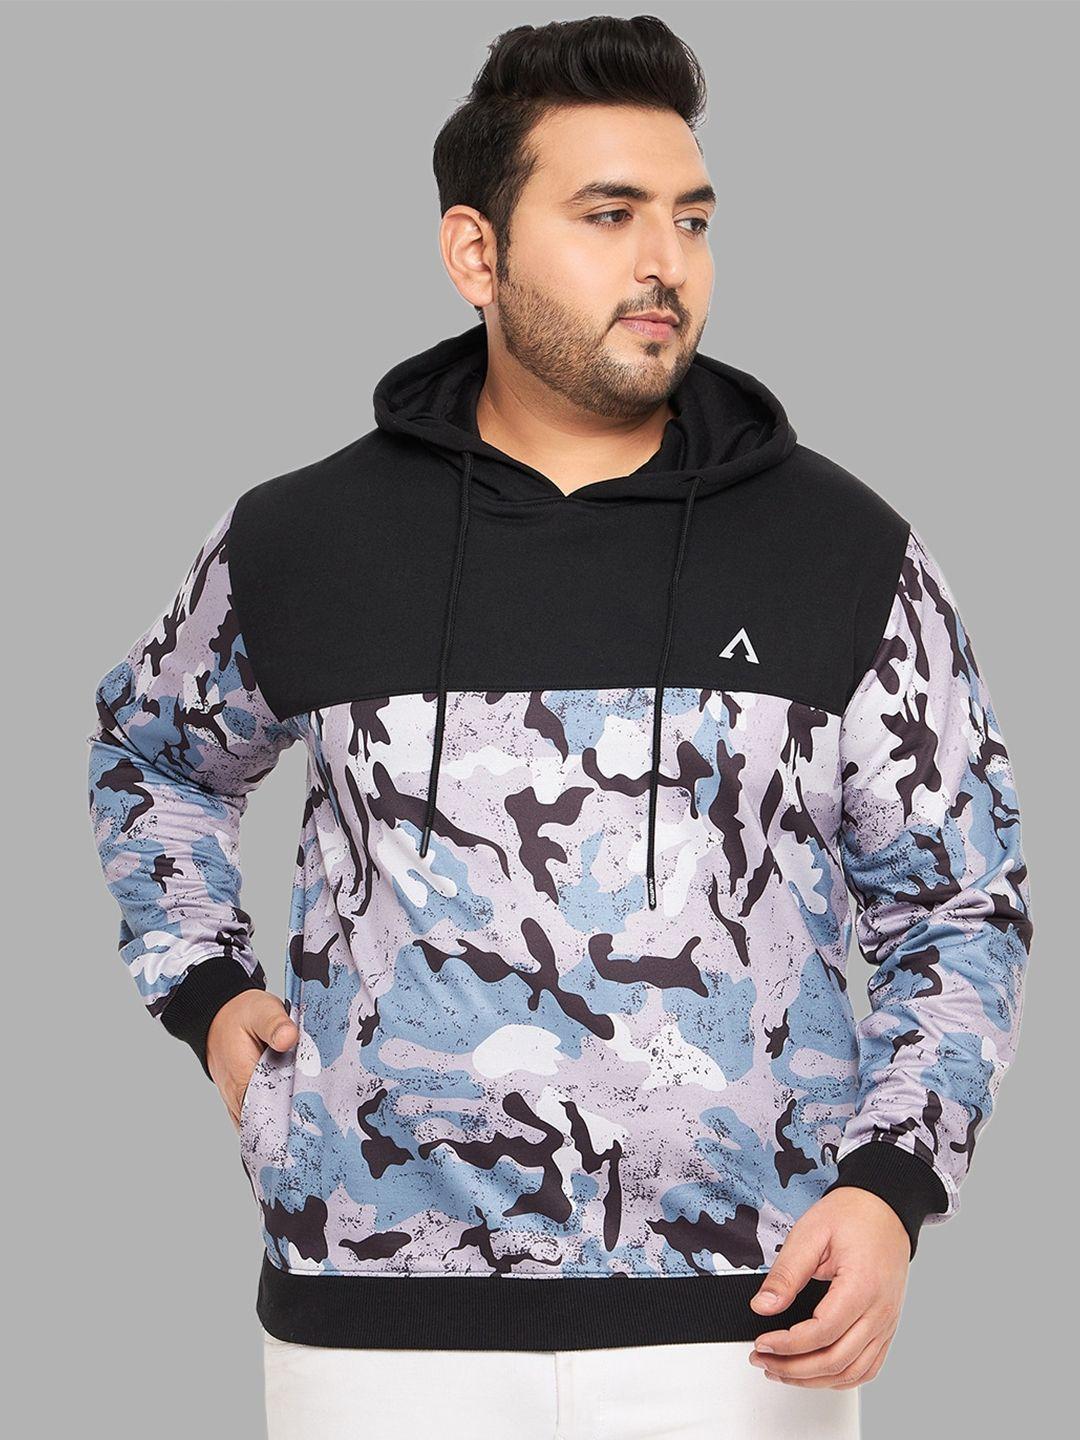 austivo plus size abstract printed fleece hooded pullover sweatshirt